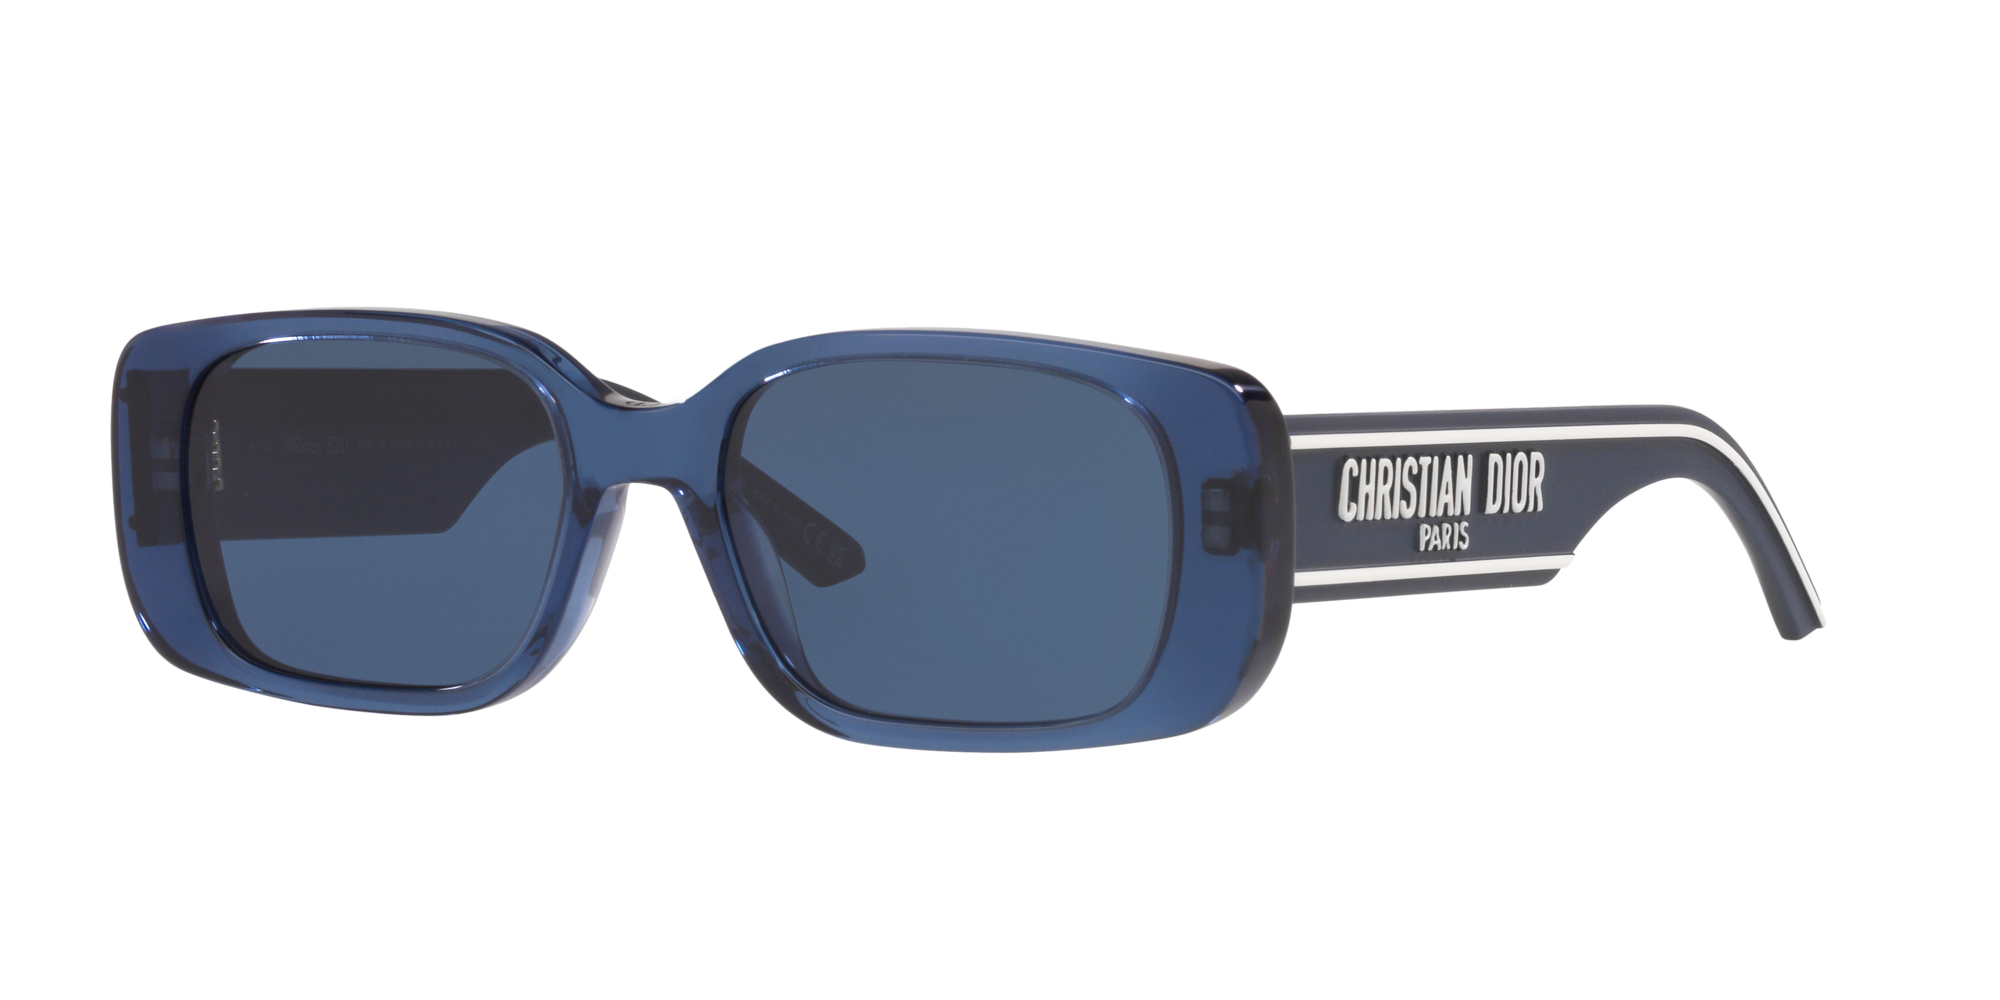 DIOR WilDior S2U 53 Blue  Blue Sunglasses  Sunglass Hut New Zealand